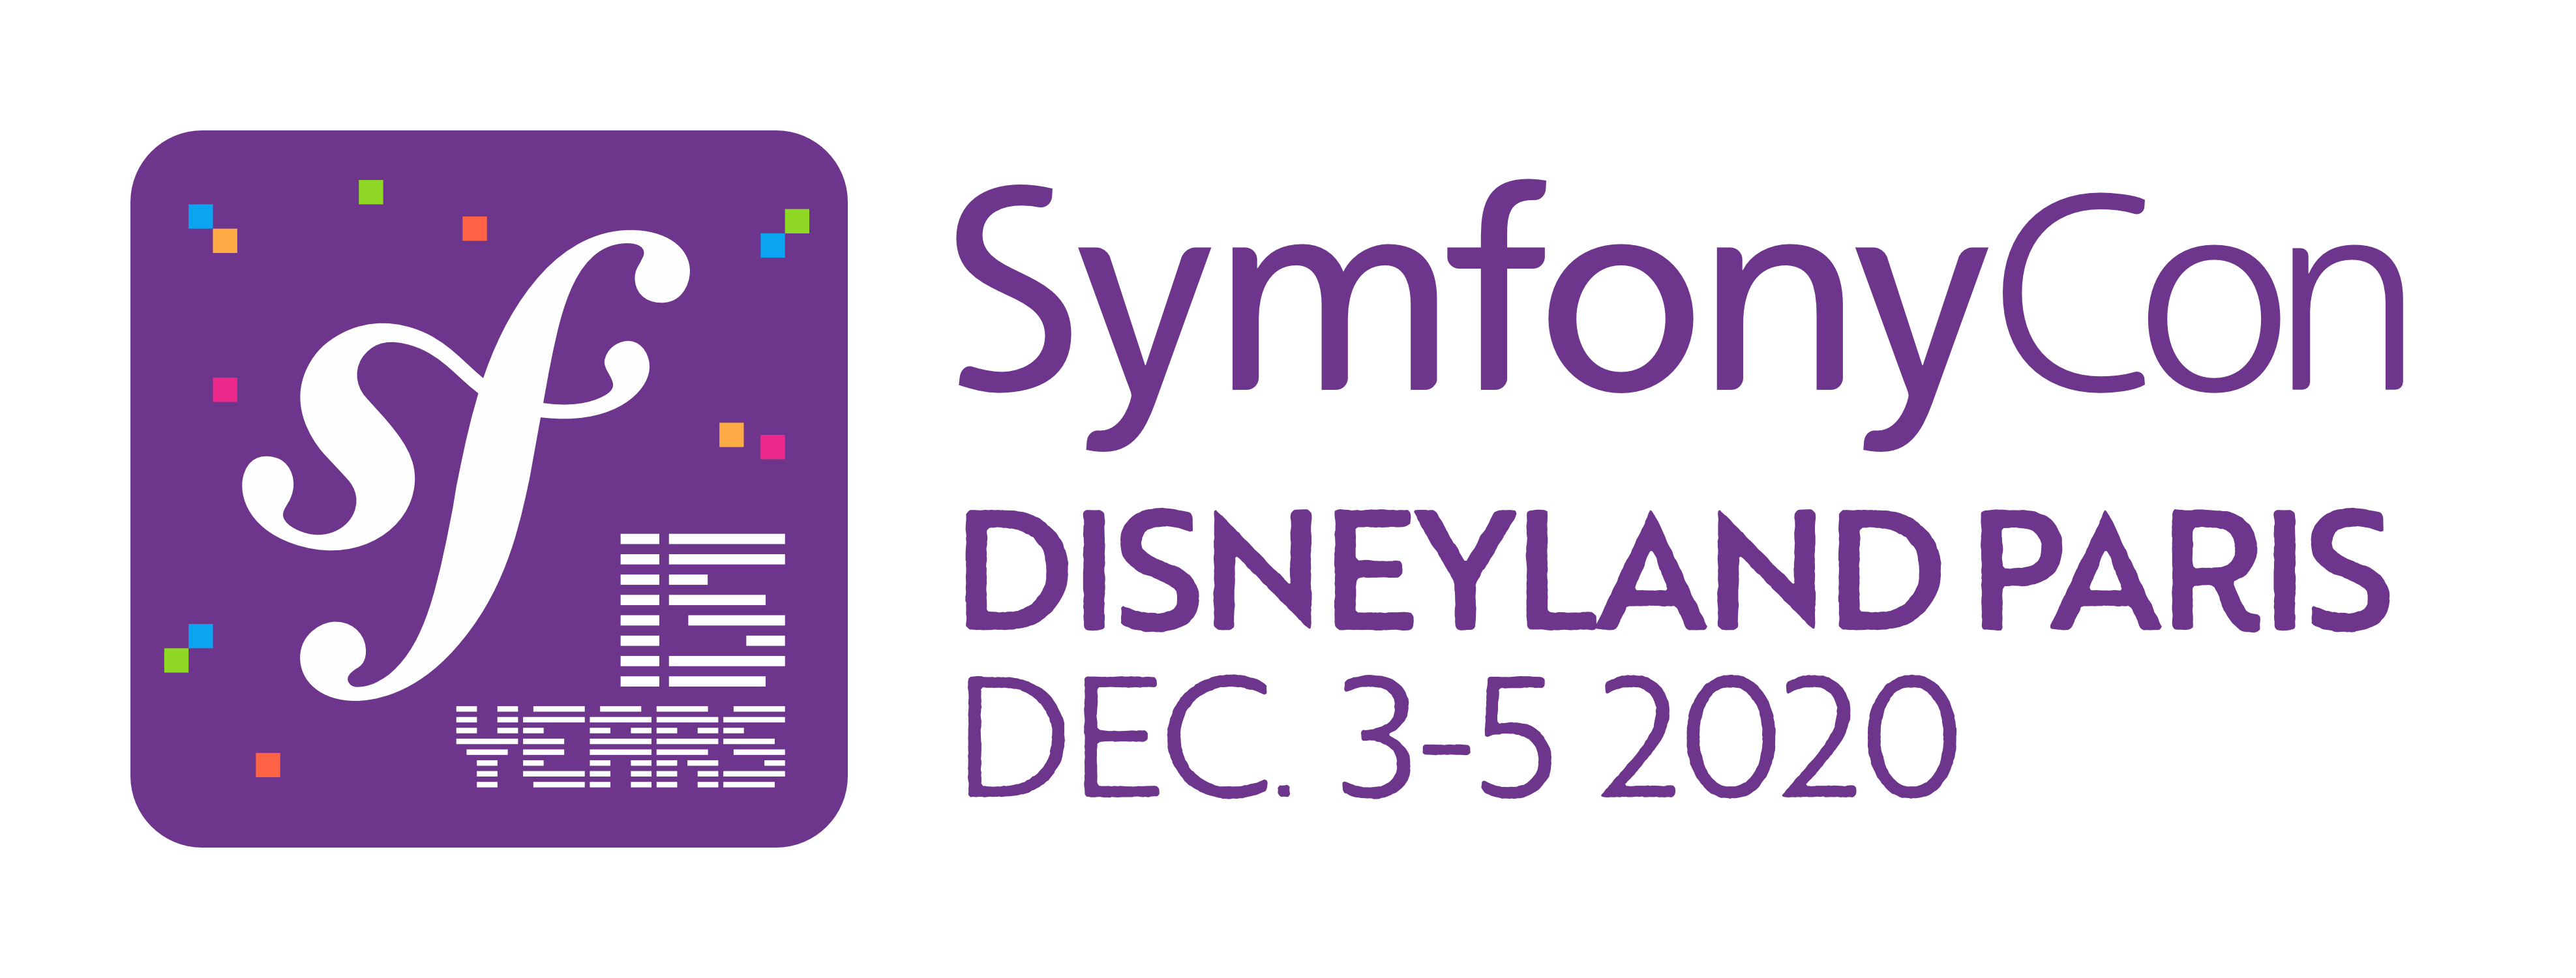 ob娱乐下载SymfonyCon巴黎迪斯尼乐园2020年大会的标志